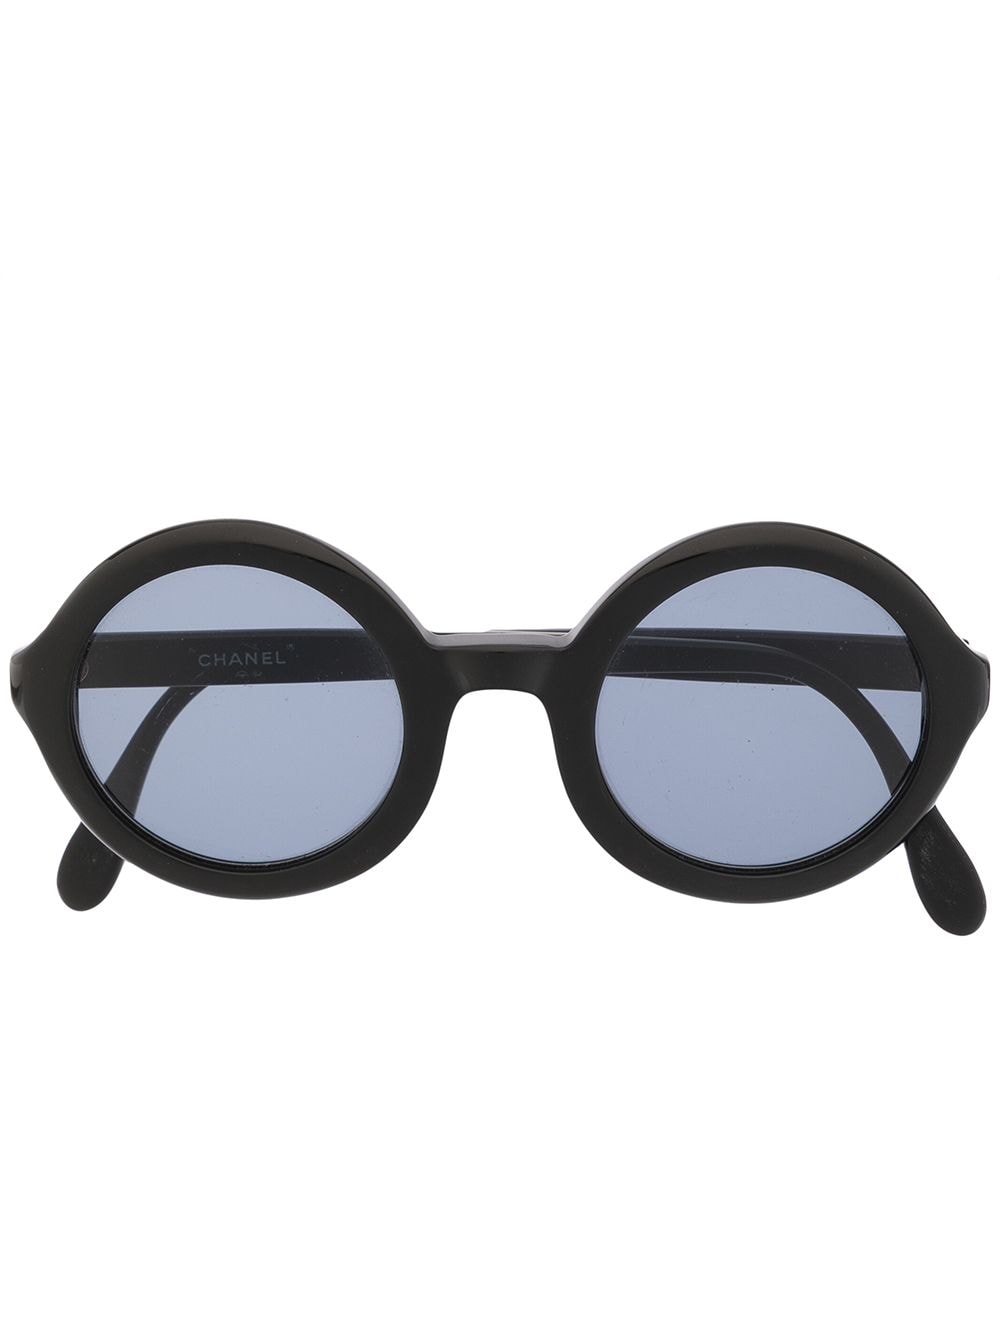 CHANEL Pre-Owned 1990s CC logo round-frame sunglasses - Black